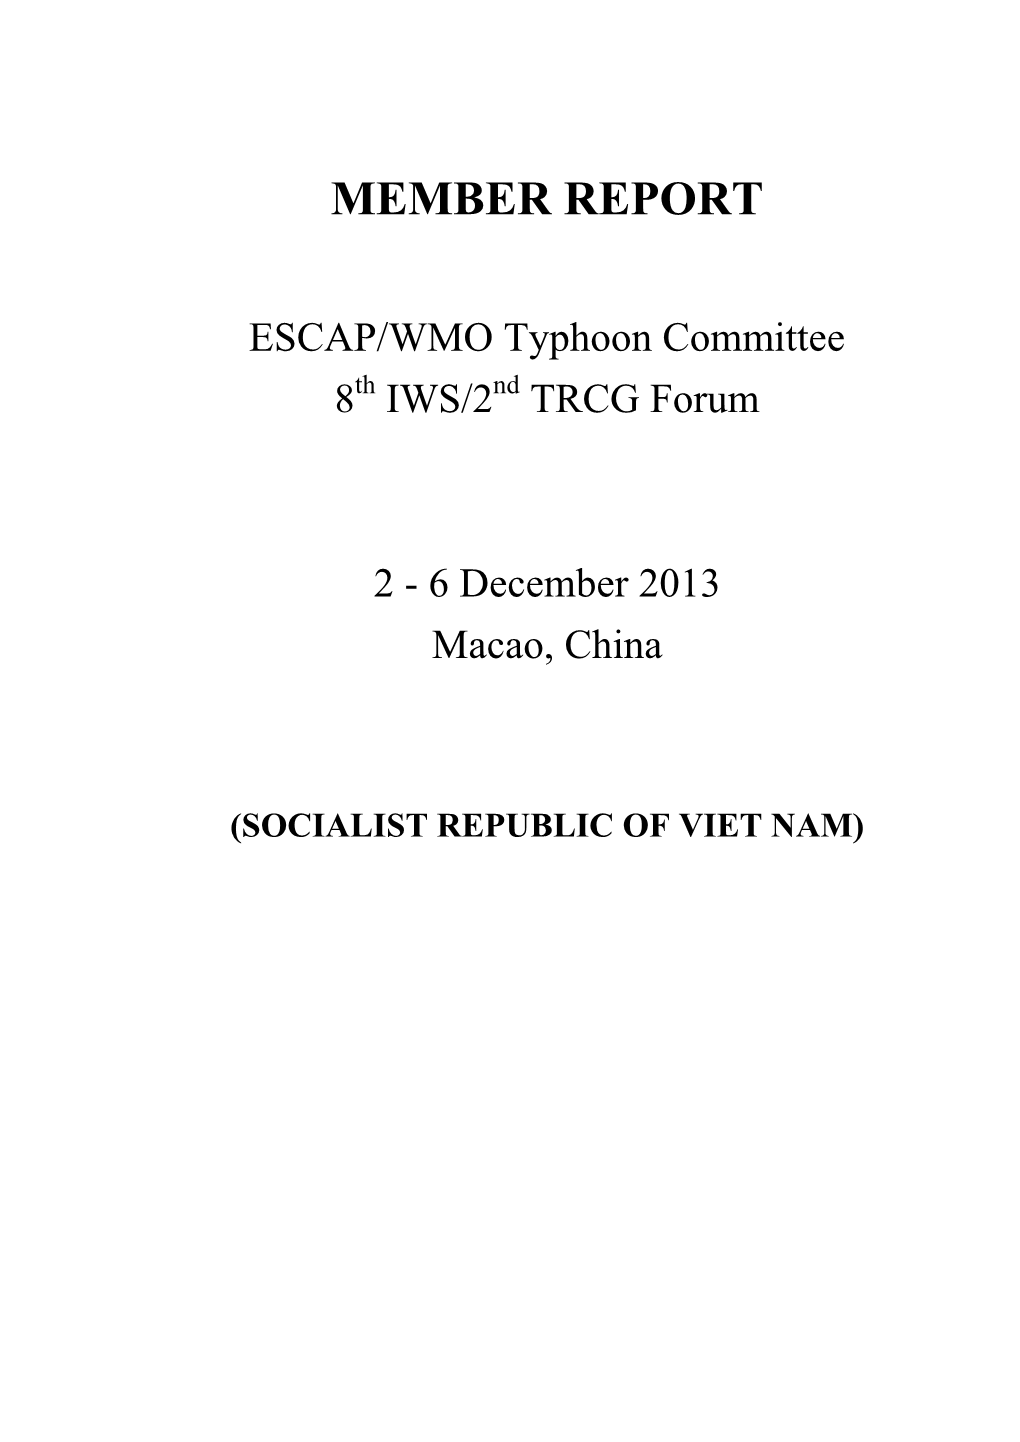 Member Report: Vietnam